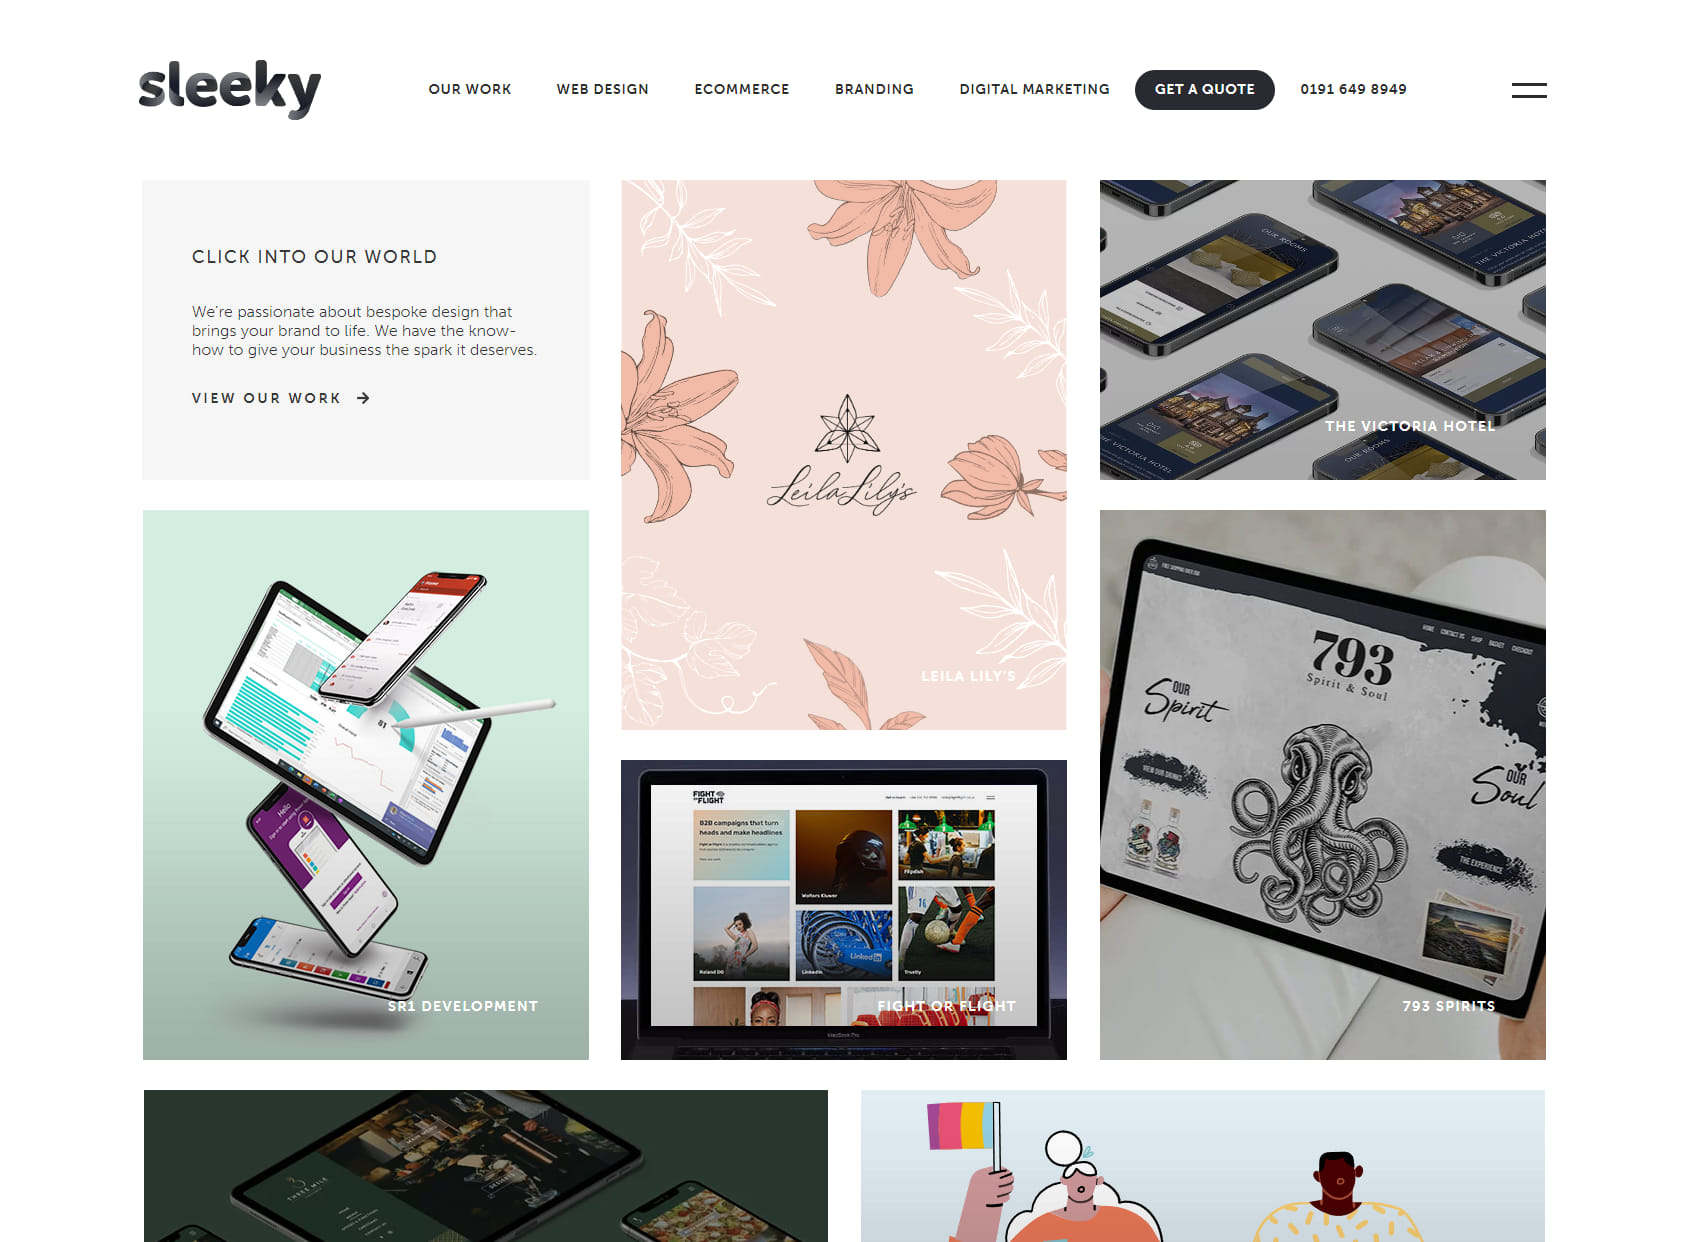 Sleeky Web Design & Print Ltd